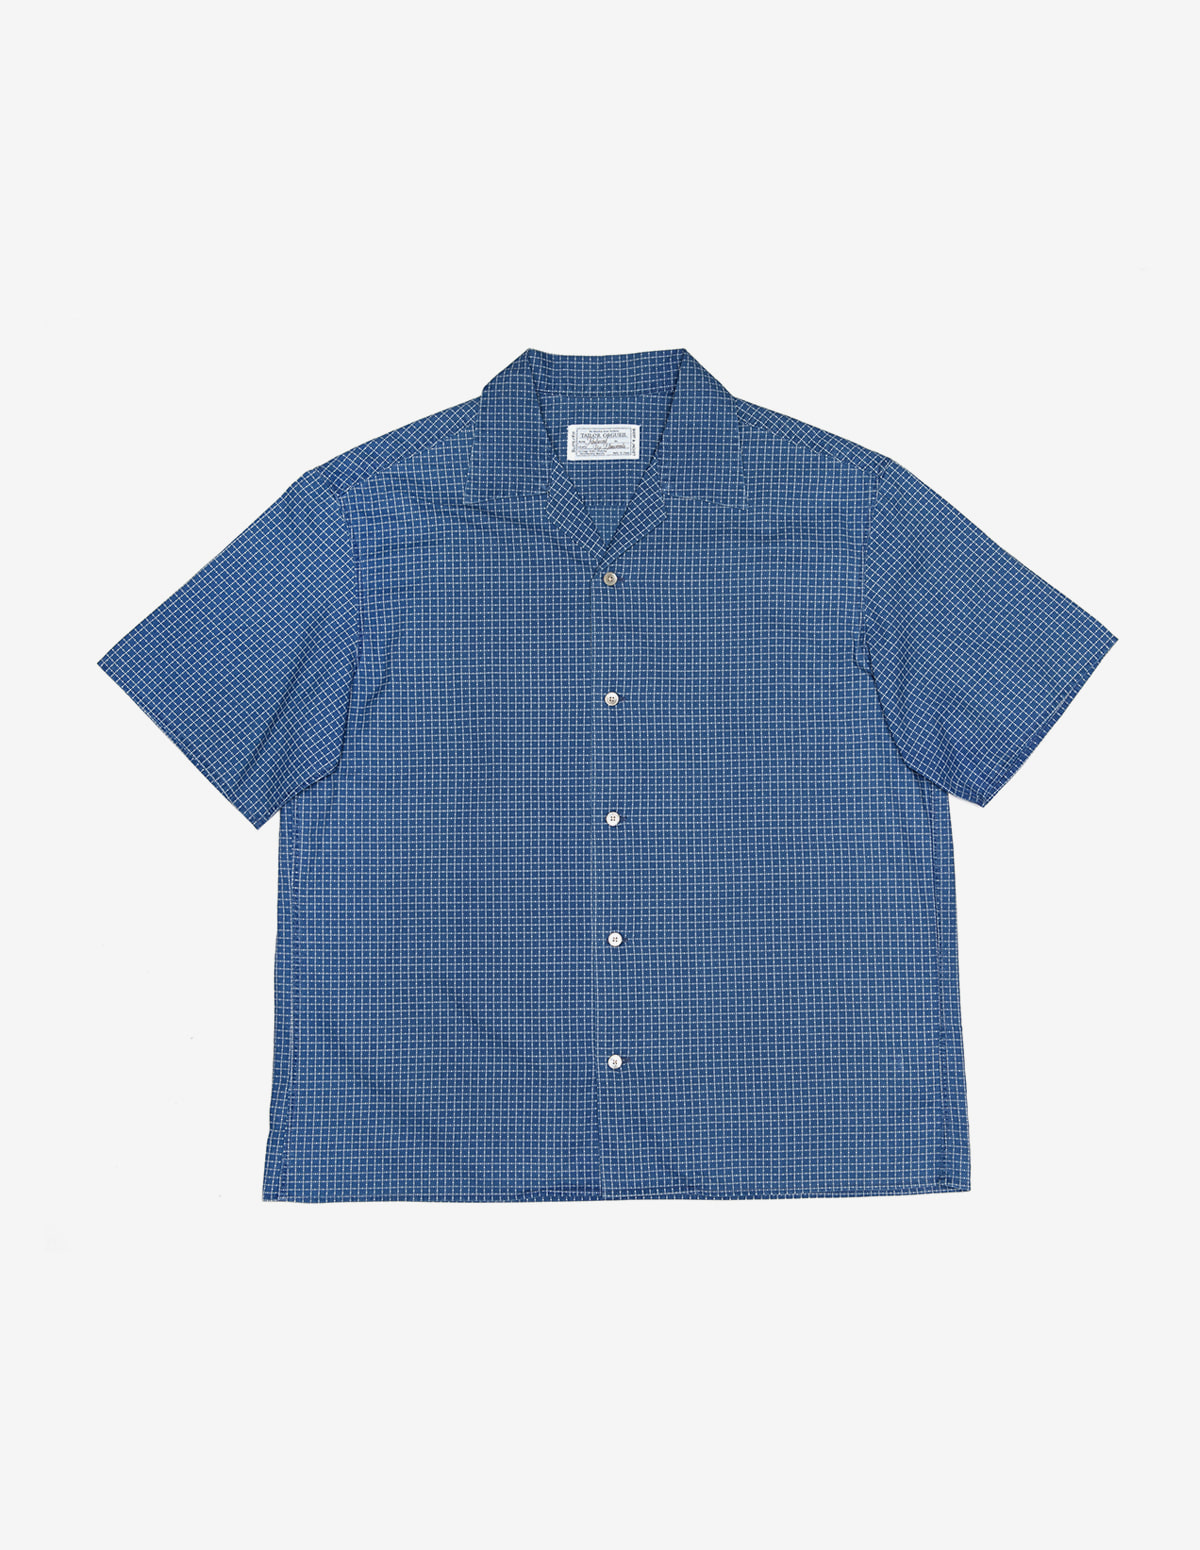 OR-5076A Wabash Shirt